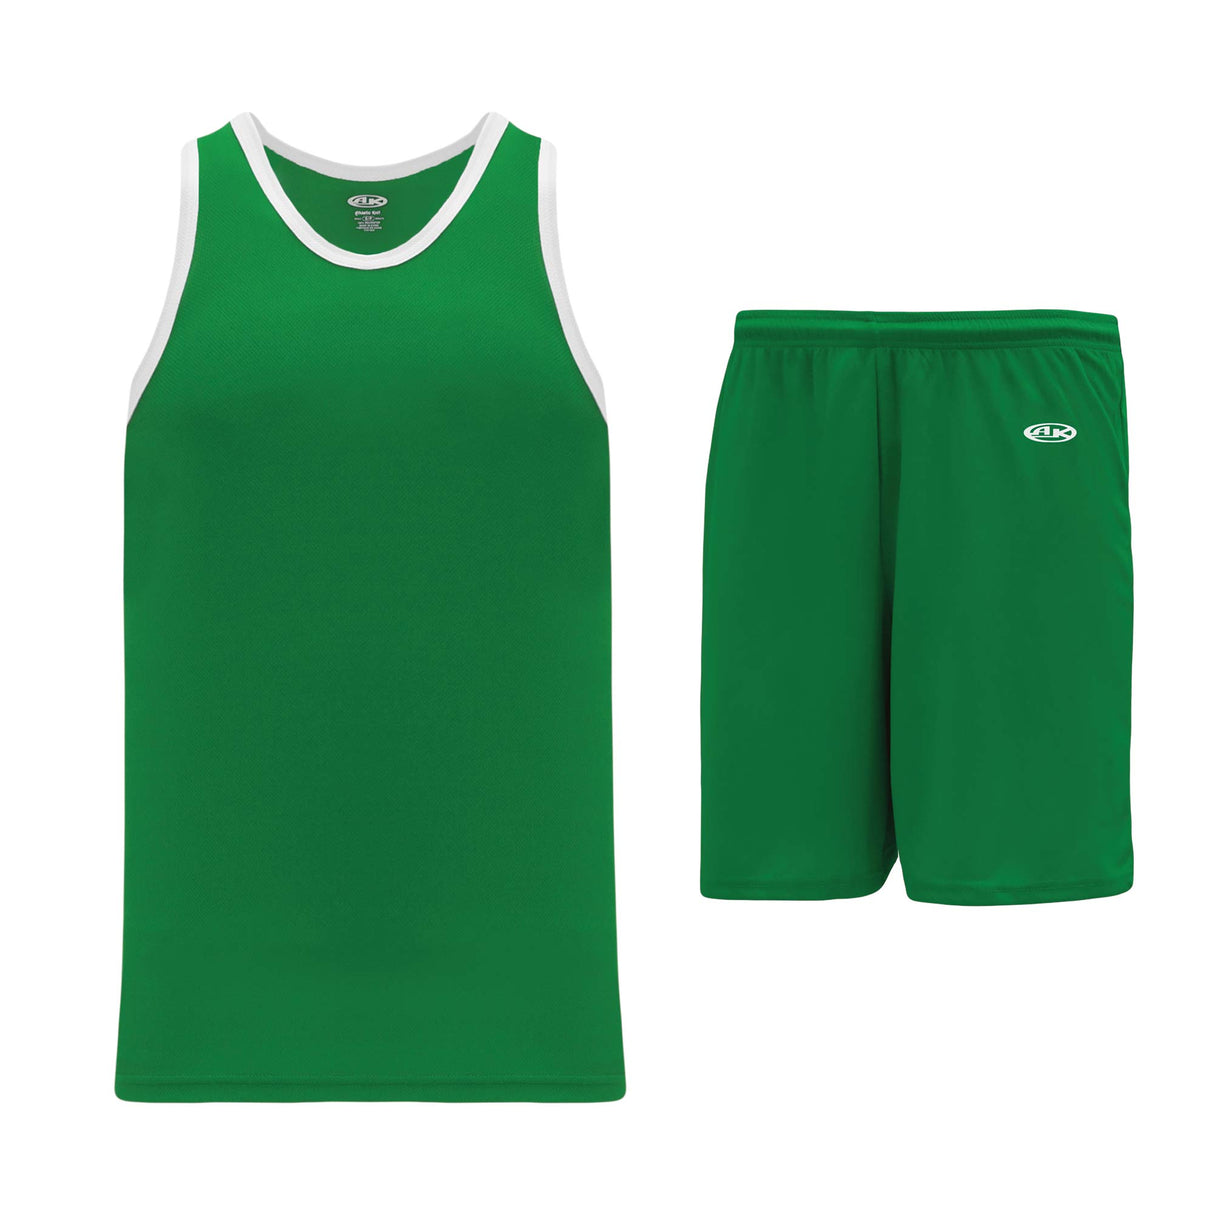 Athletic Knit B1325 ensemble basket camisole short vert blanc